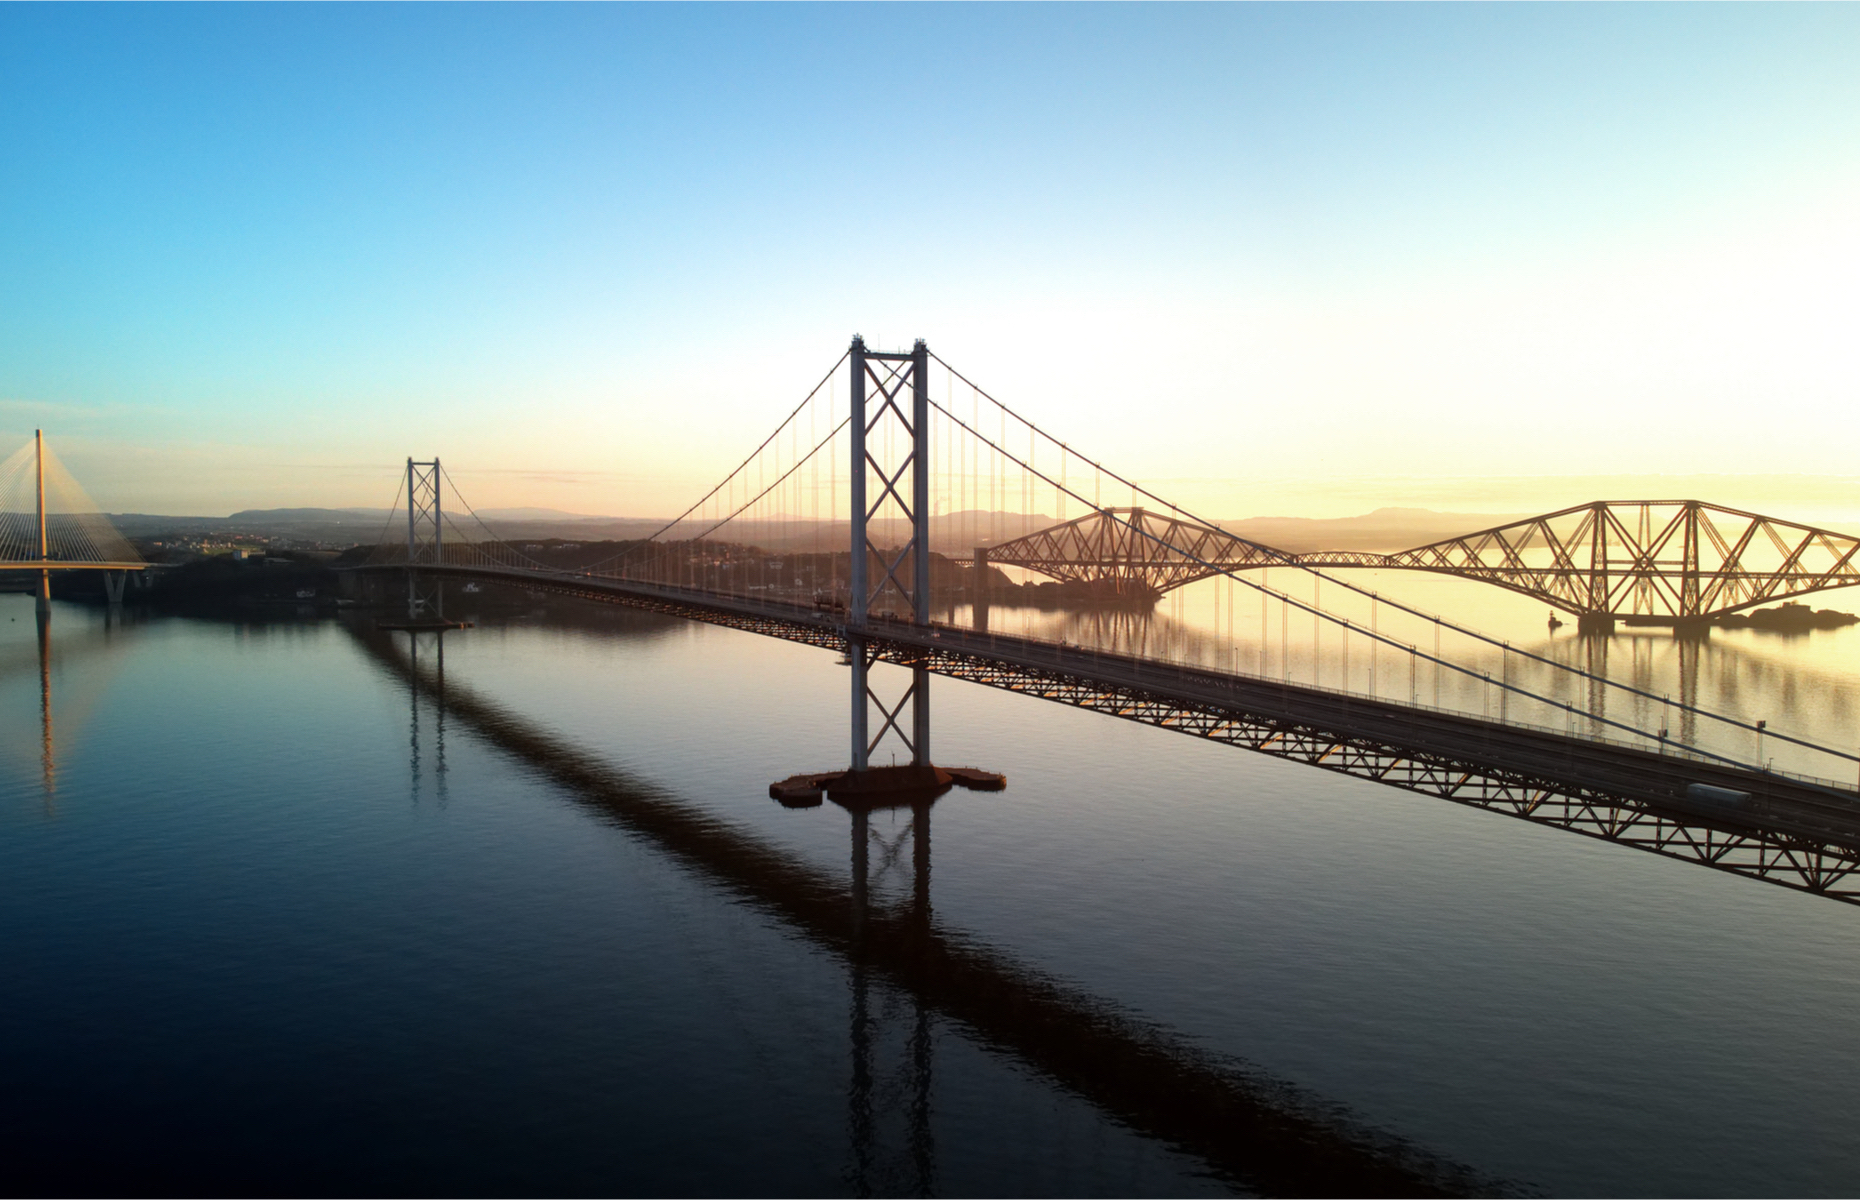 The three Forth Bridges Scotland (Image: Tana888/Shutterstock)